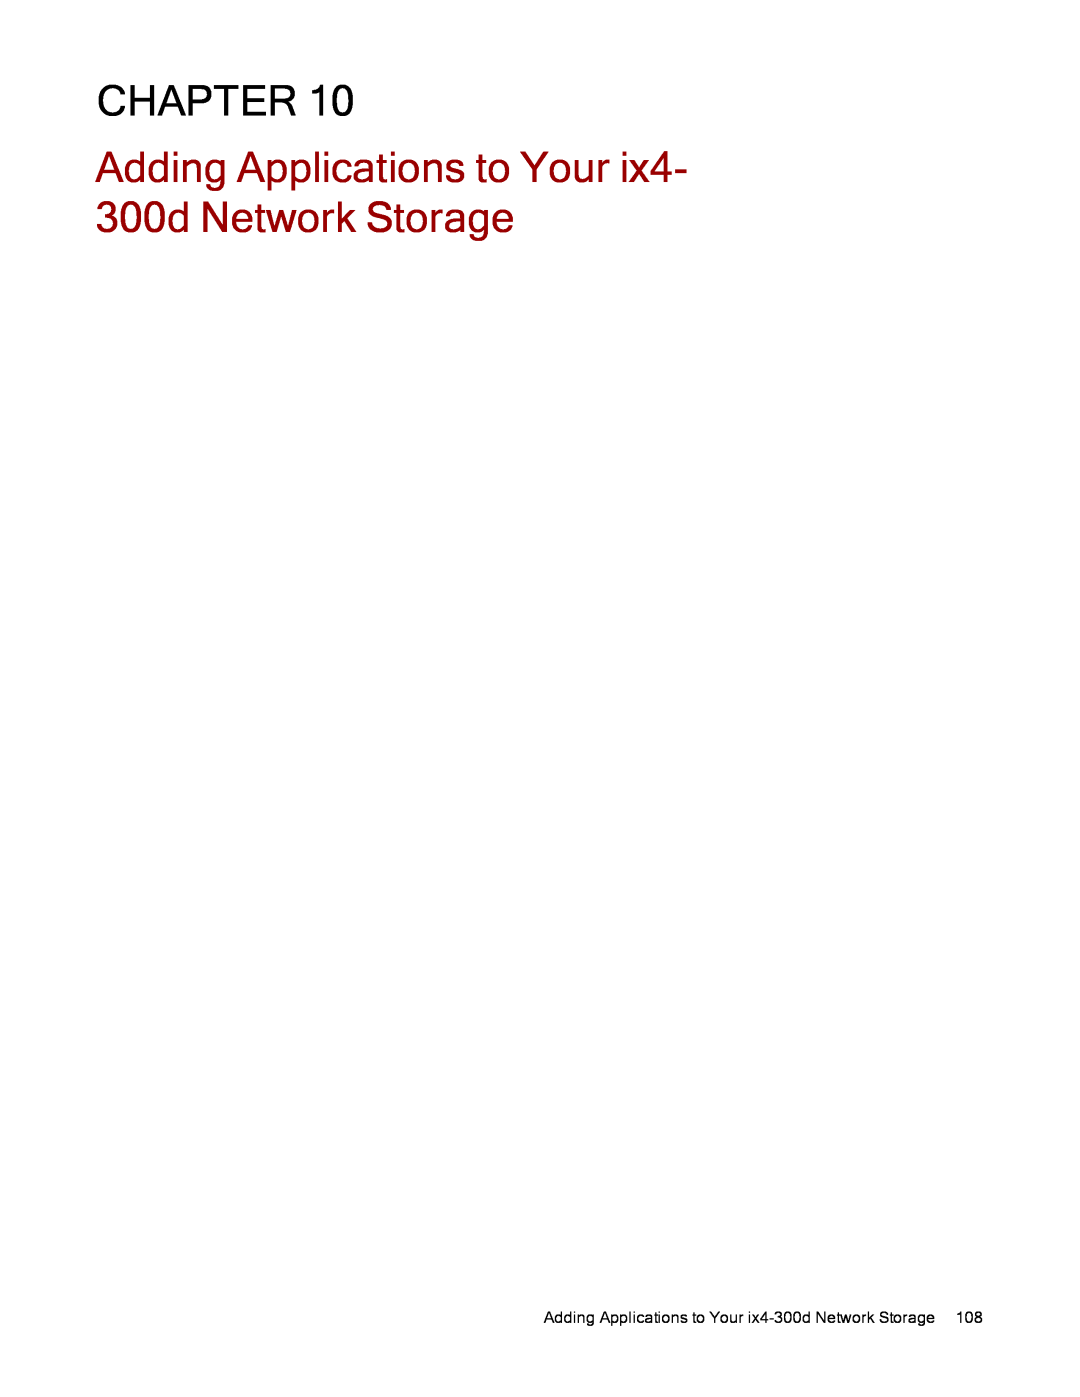 Lenovo 70B89001NA, 70B89003NA, 70B89000NA manual Adding Applications to Your ix4- 300d Network Storage, Chapter 